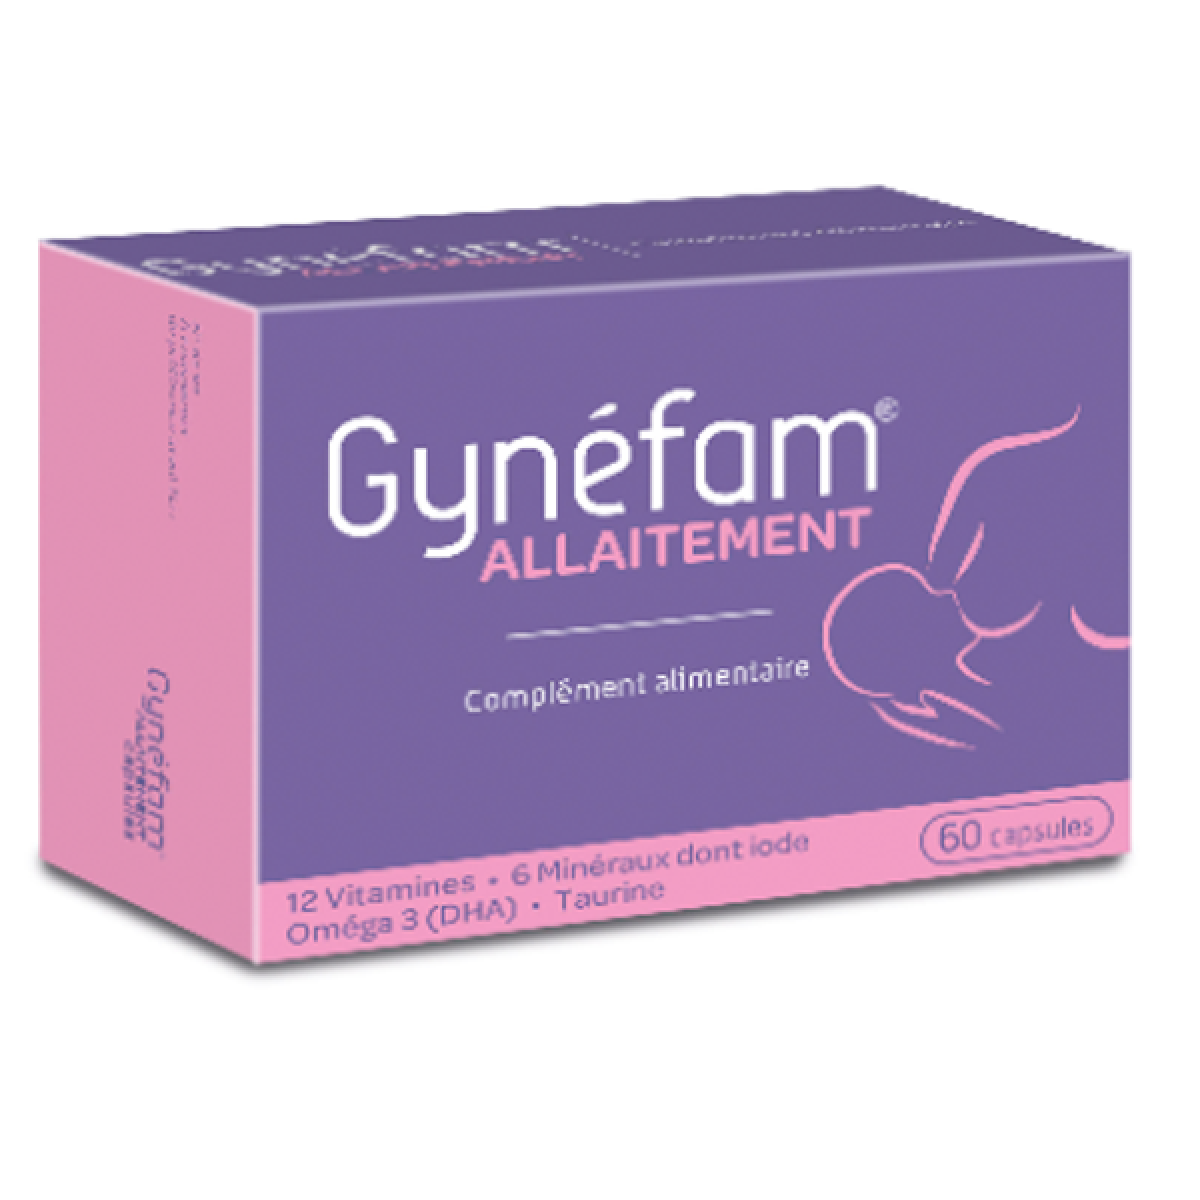 EFFIK Gynéfam allaitement 60 capsules - Parapharmacie - Pharmarket